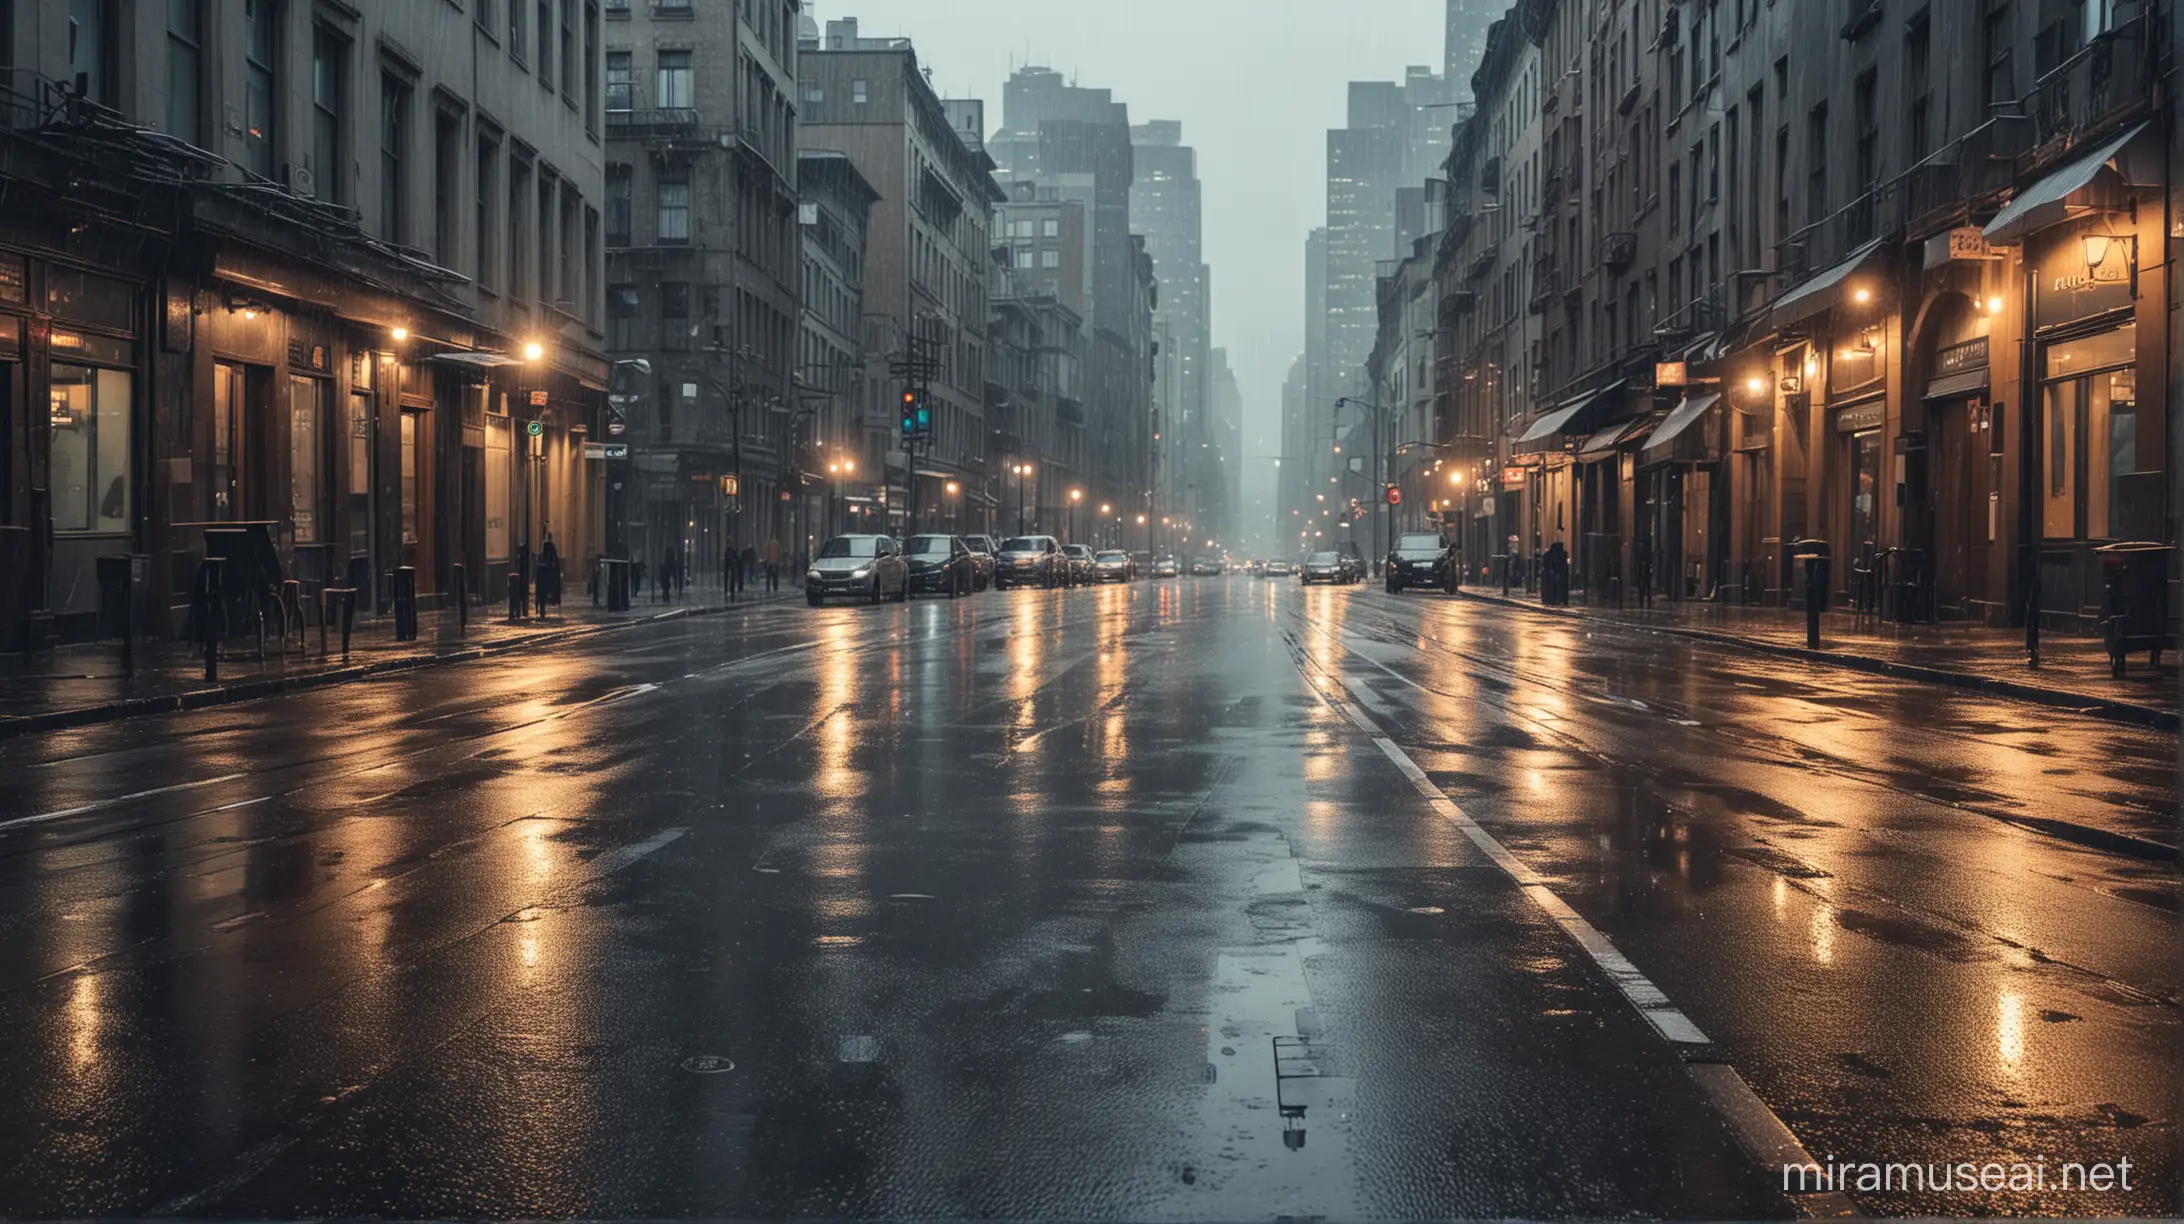 Rainy City Street Scene with Umbrellas and Reflections